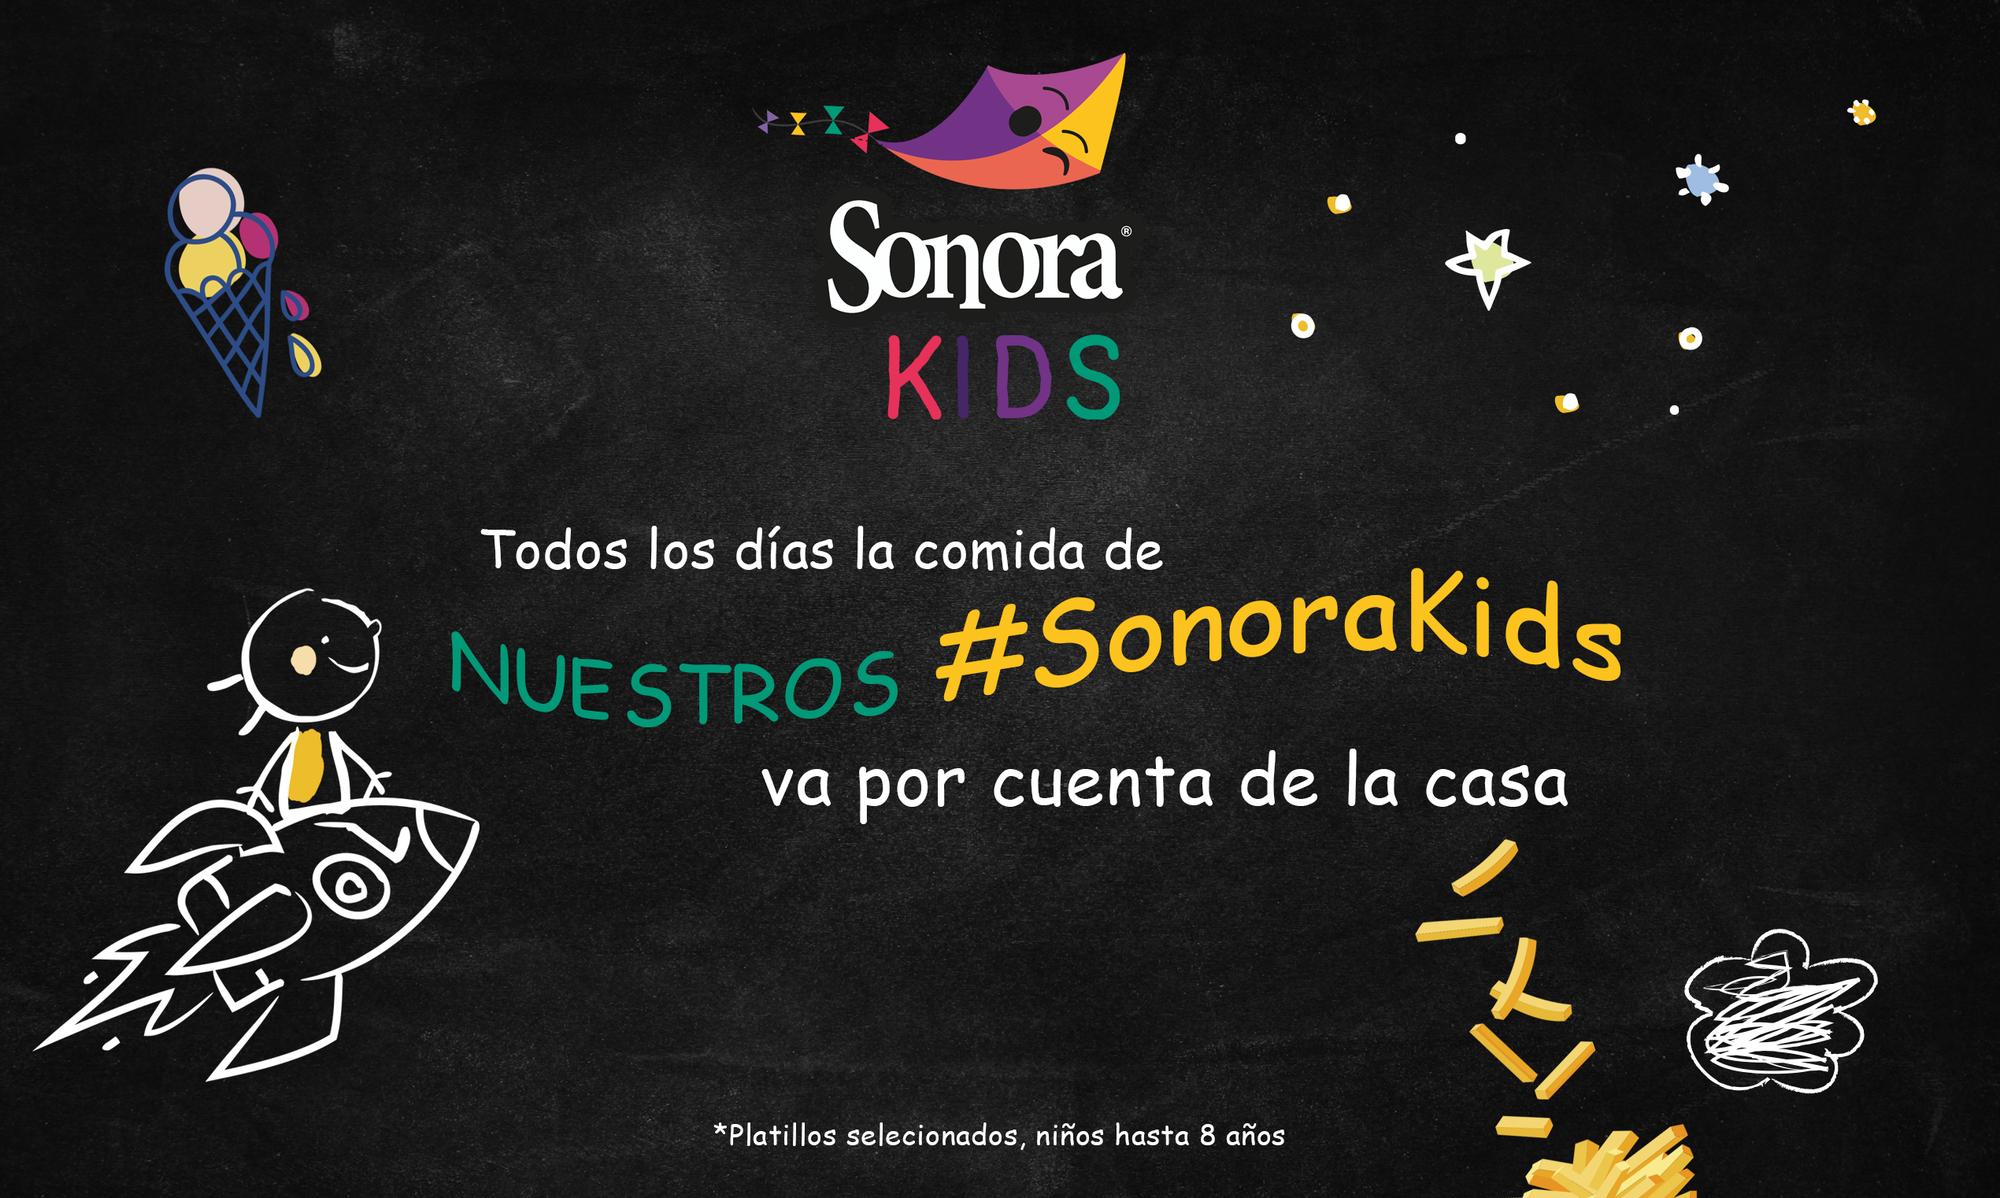 Sonora Kids' free menu